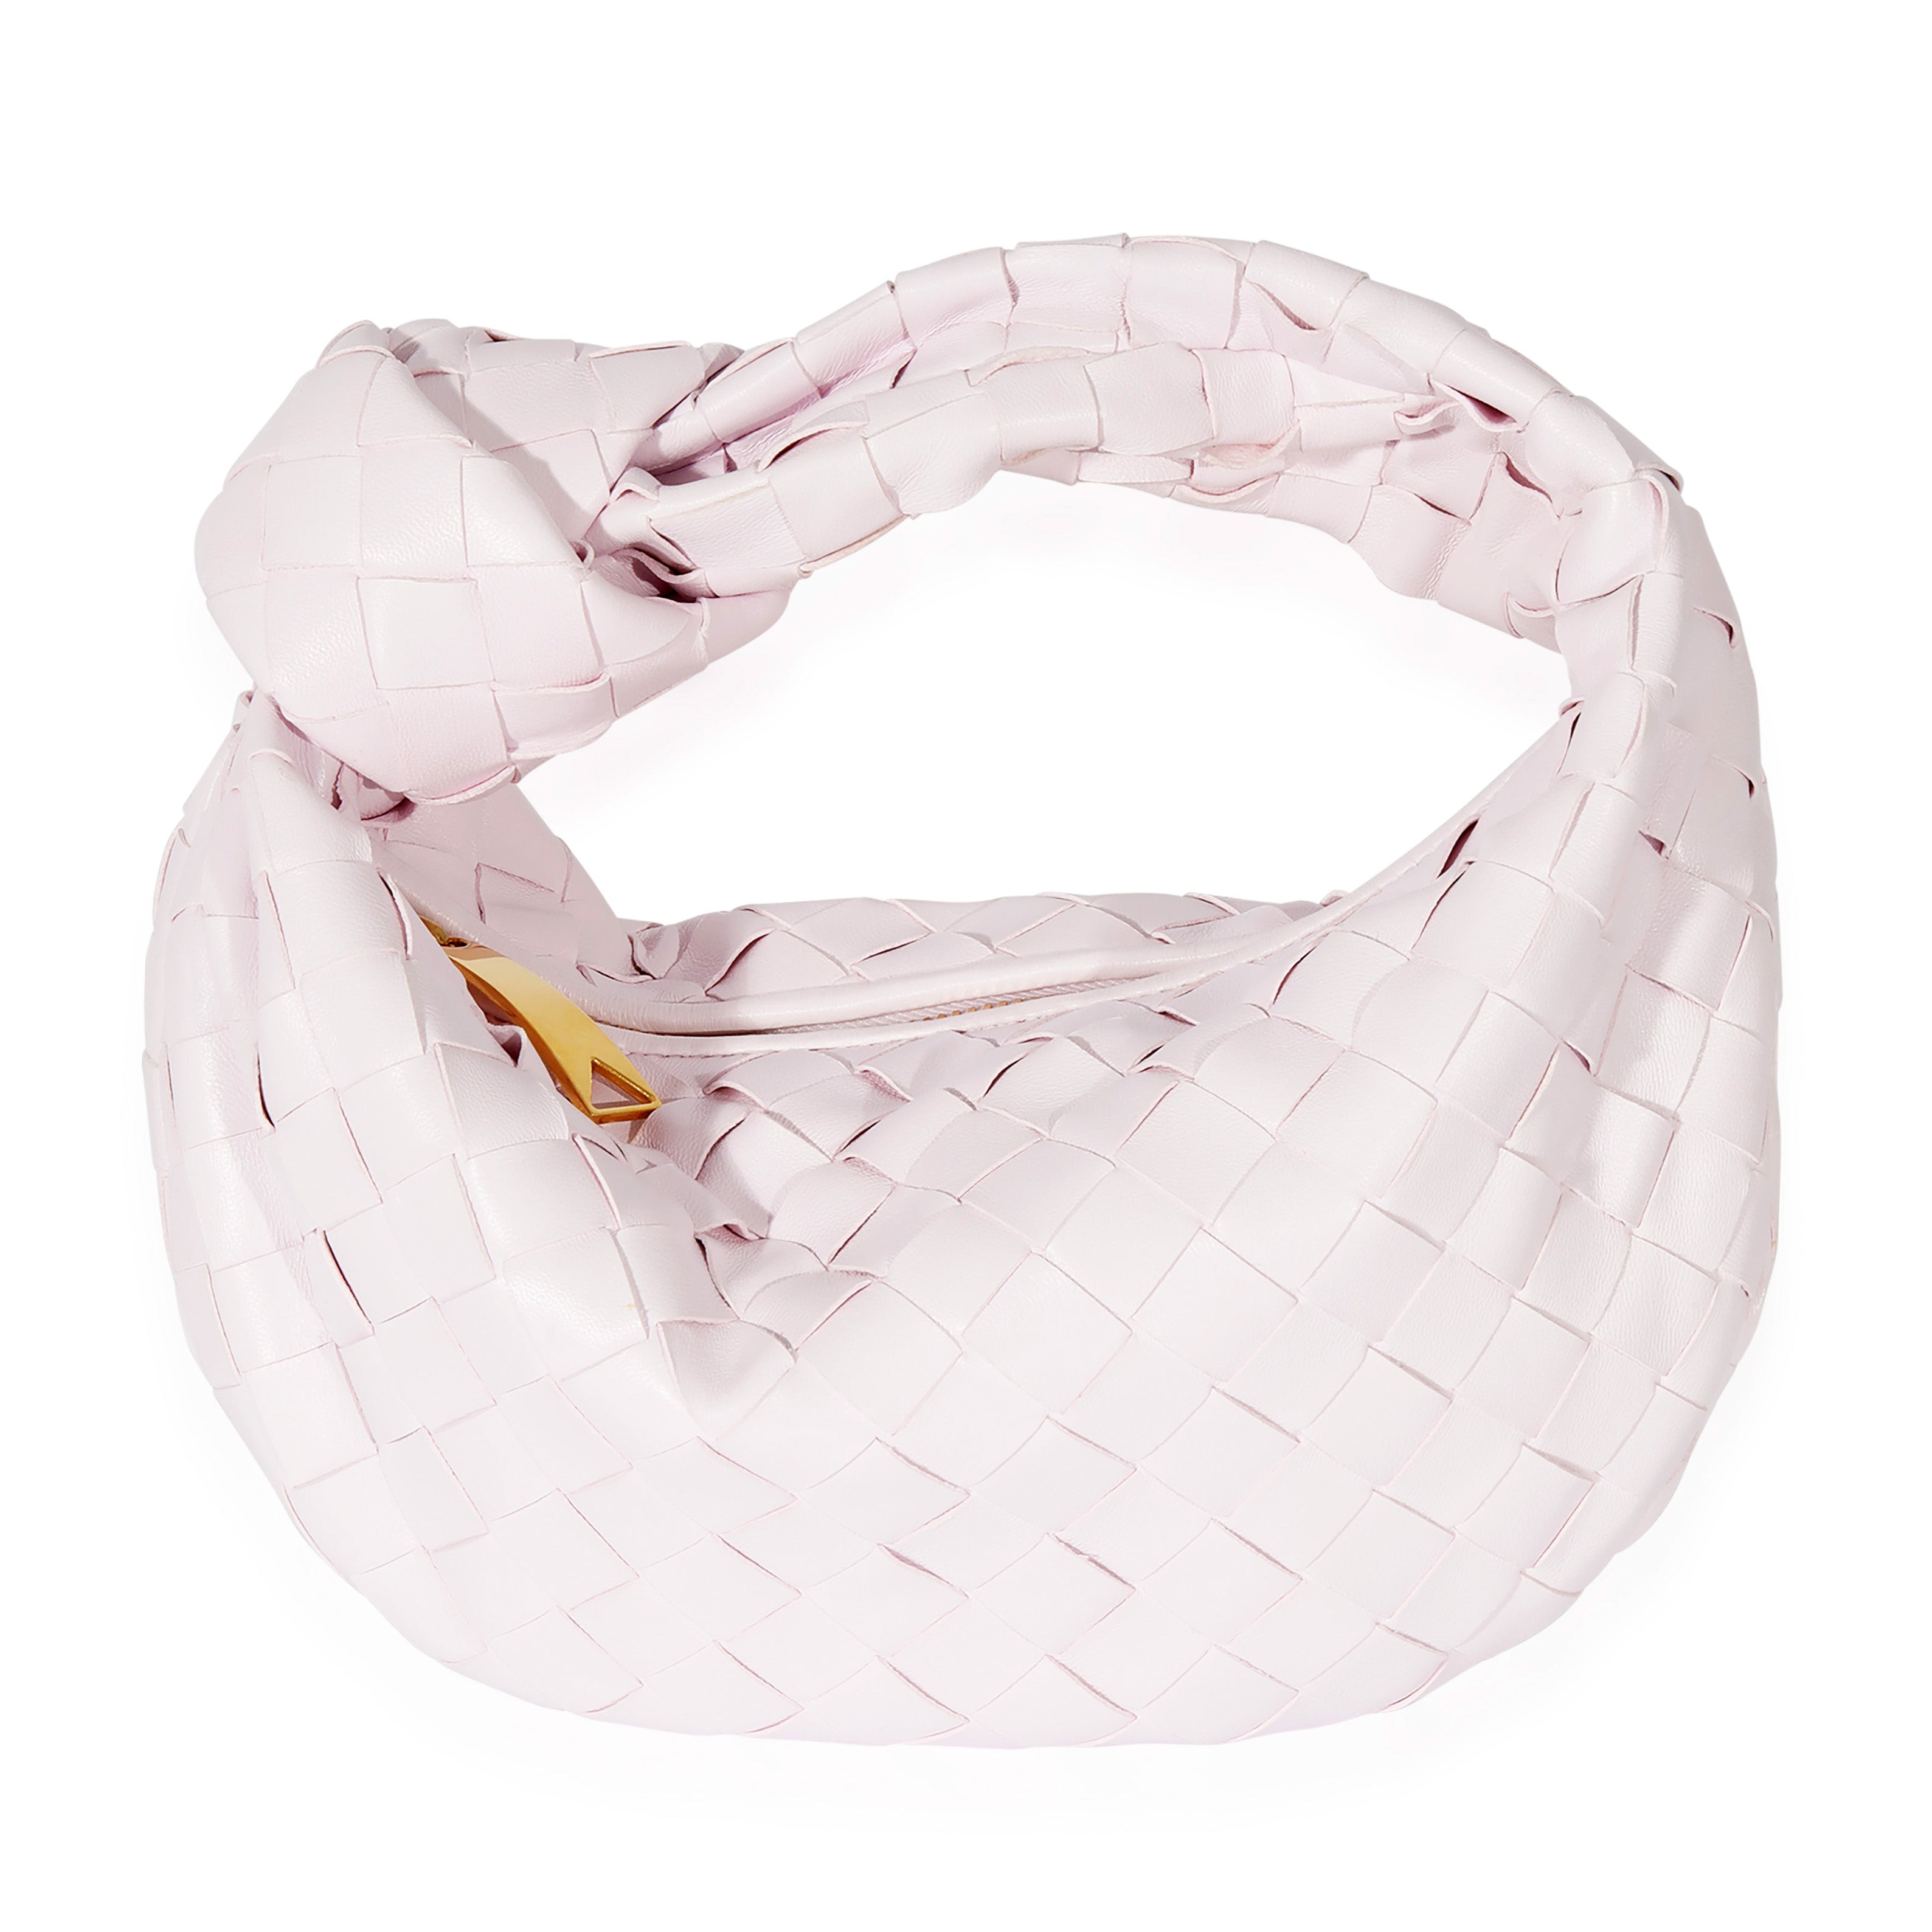 Louis Vuitton Totally MM monogram tote, bllush pink scarf with